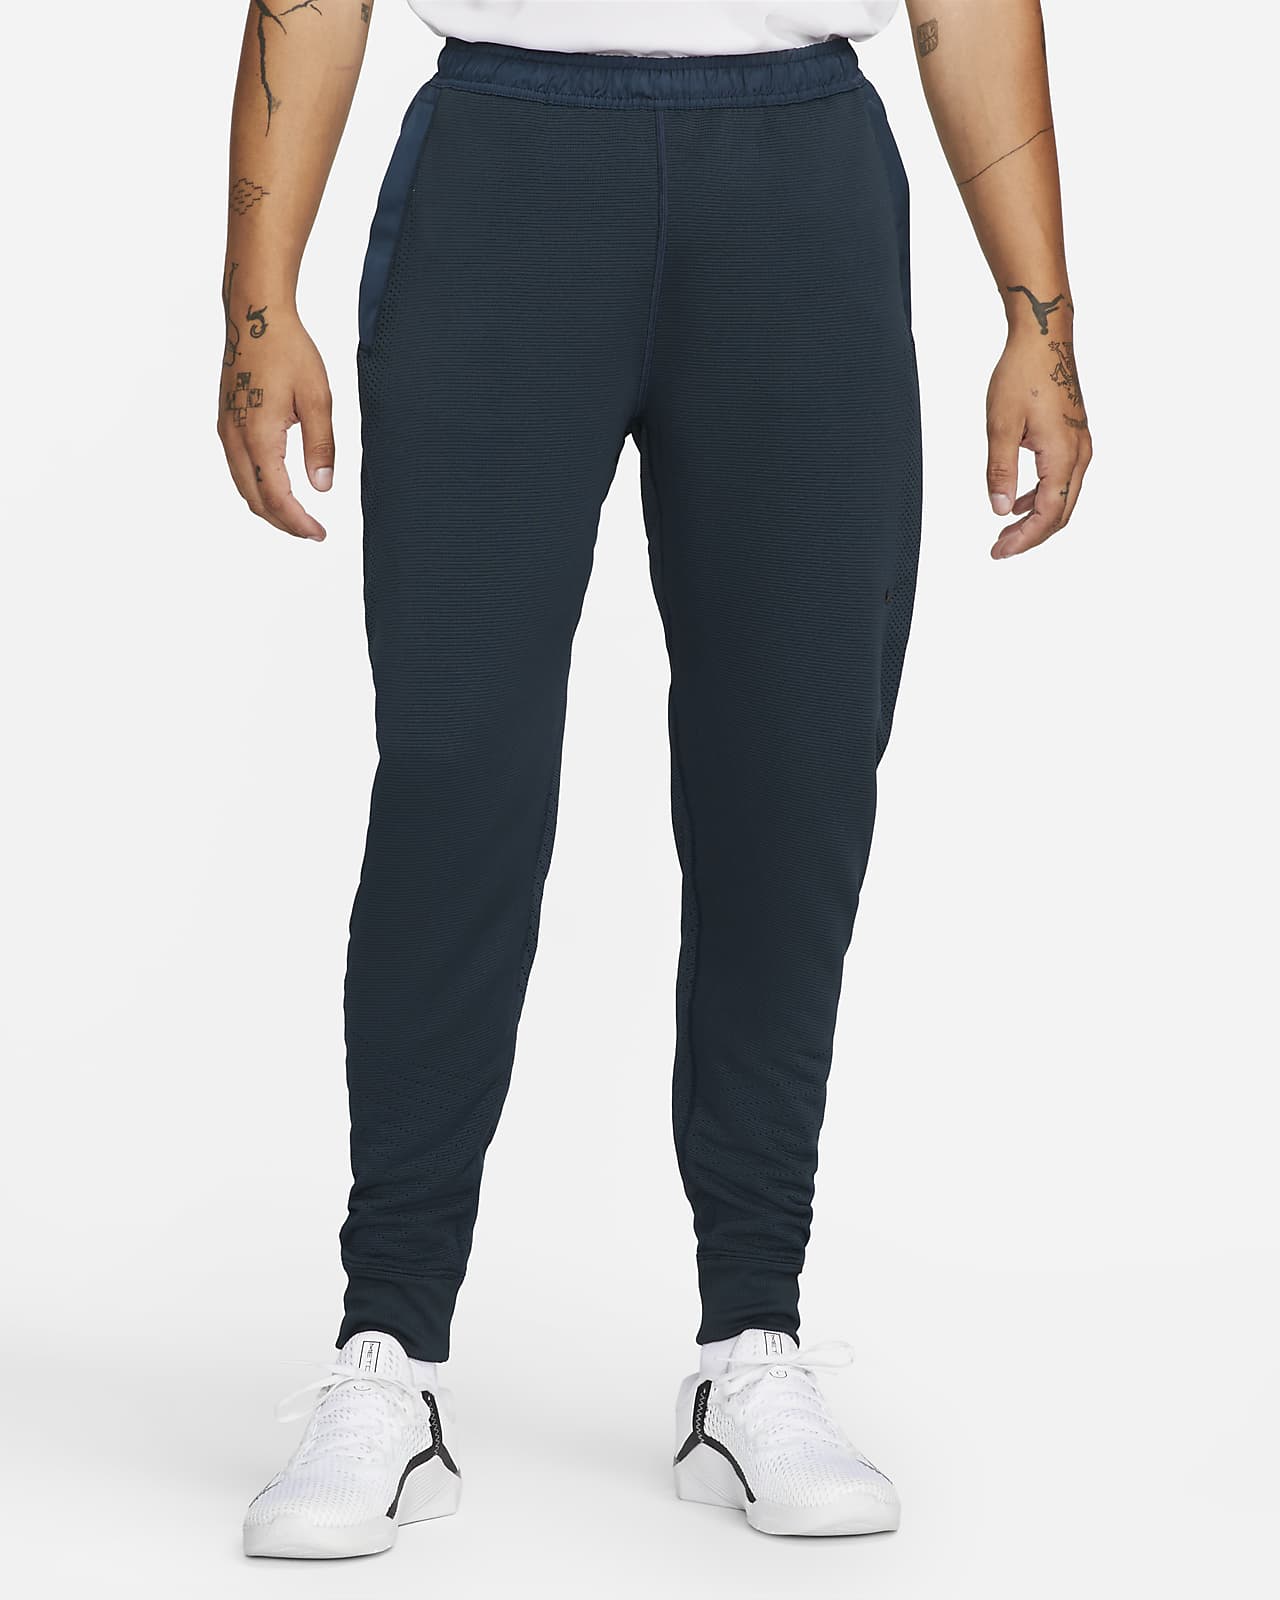 Therma-FIT A.P.S. Men's Fleece Fitness Pants. Nike.com